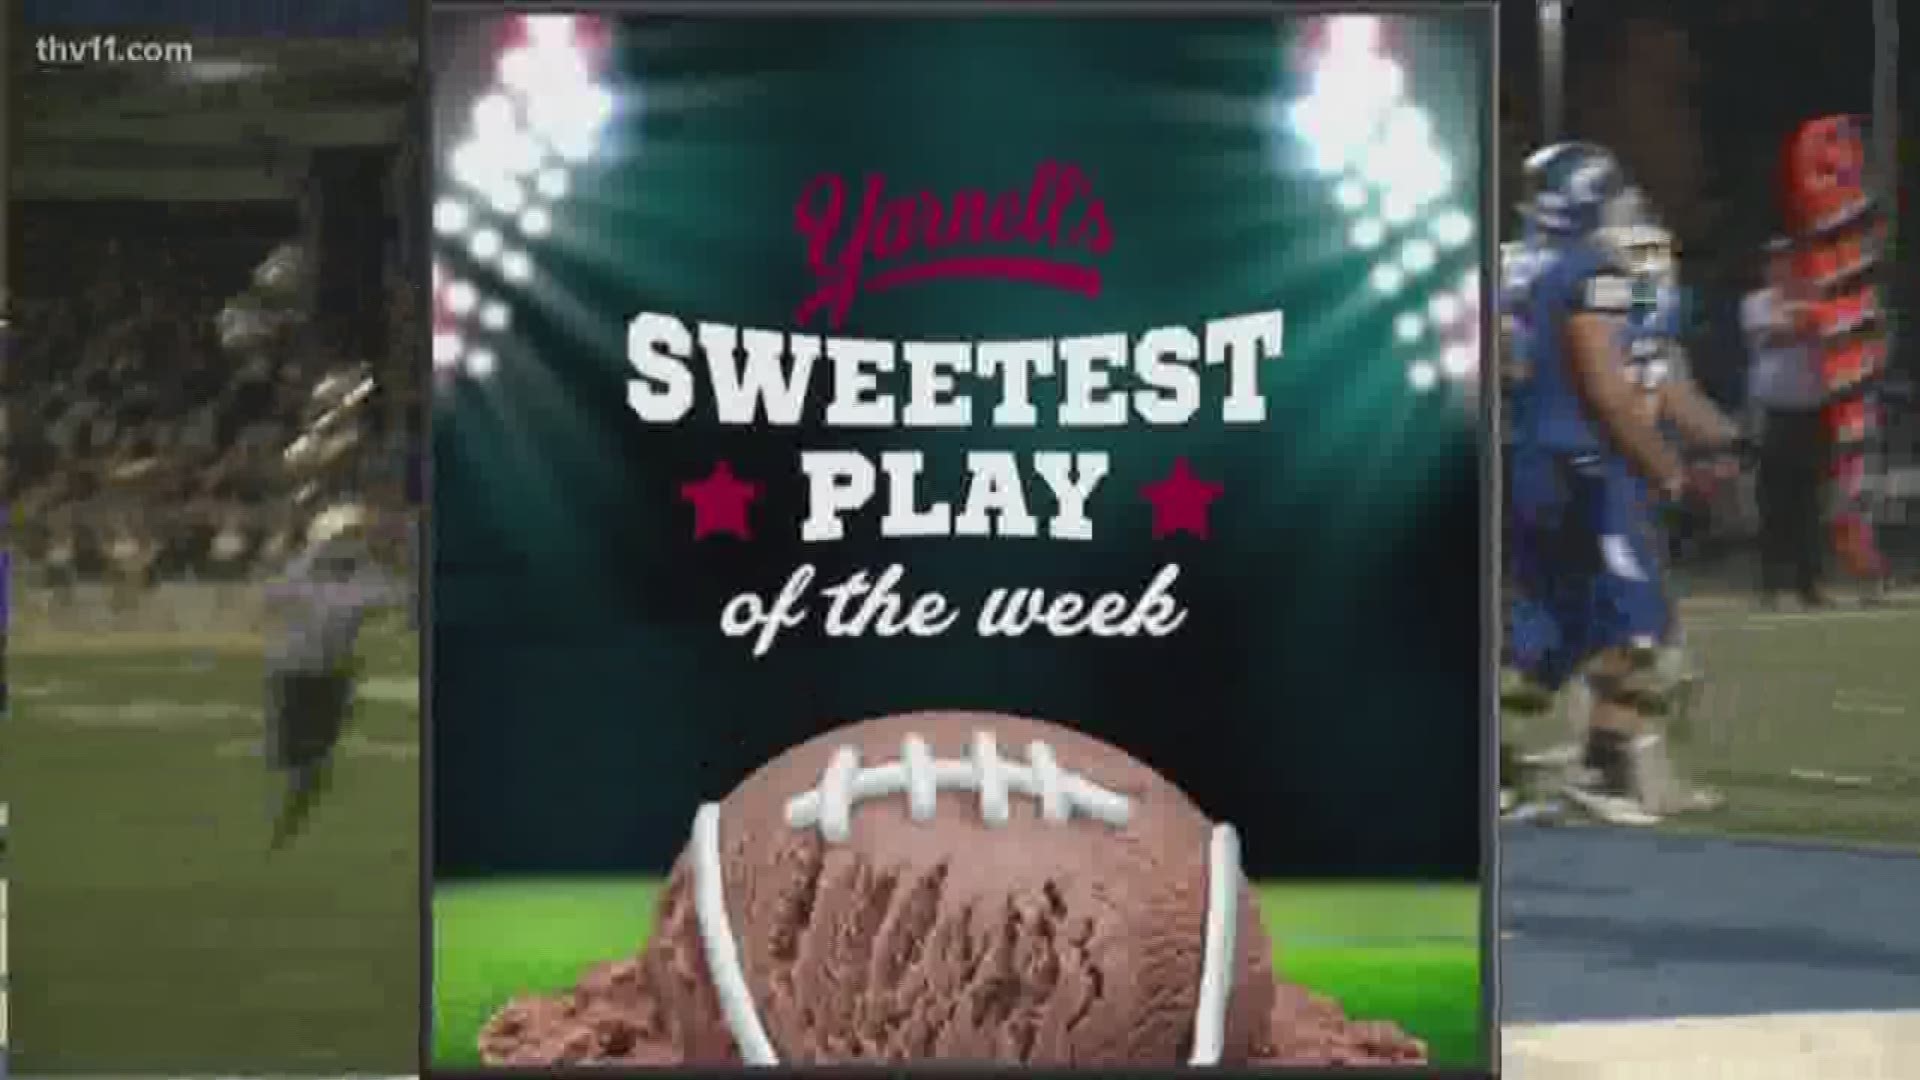 Yarnell's Sweetest Play of the Week: Week 6 Nominees